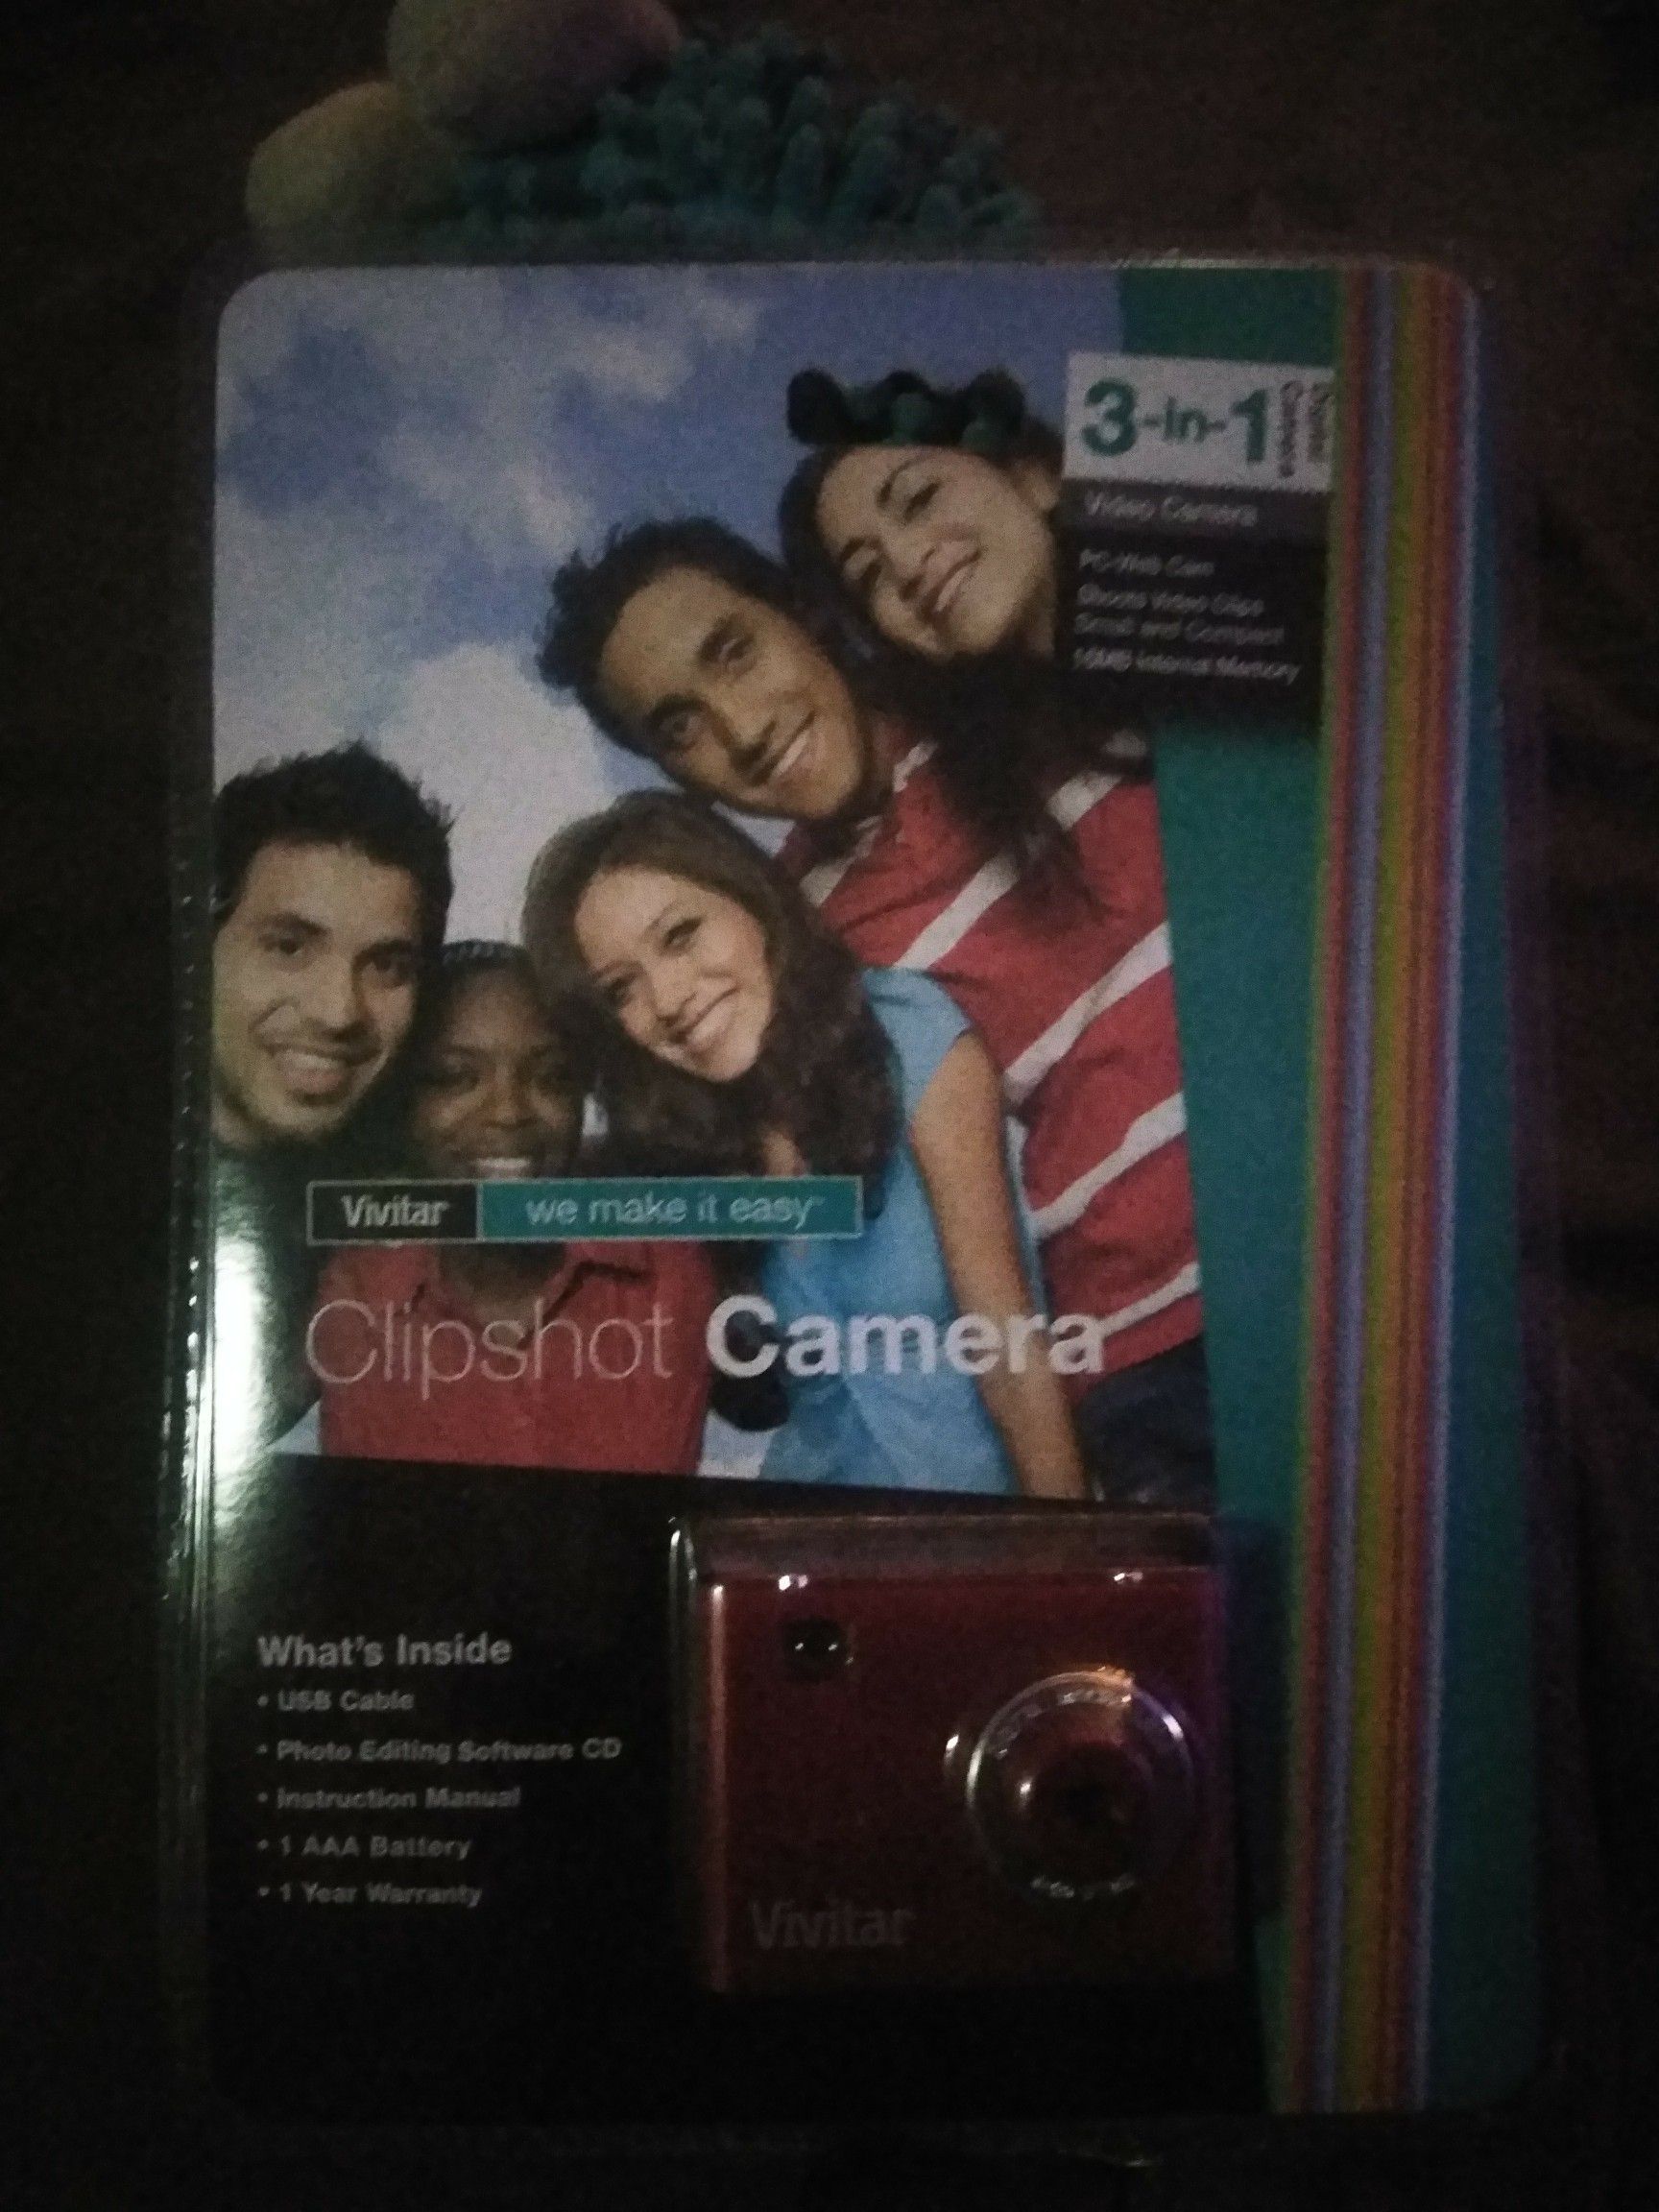 Vivitar clipshot camera